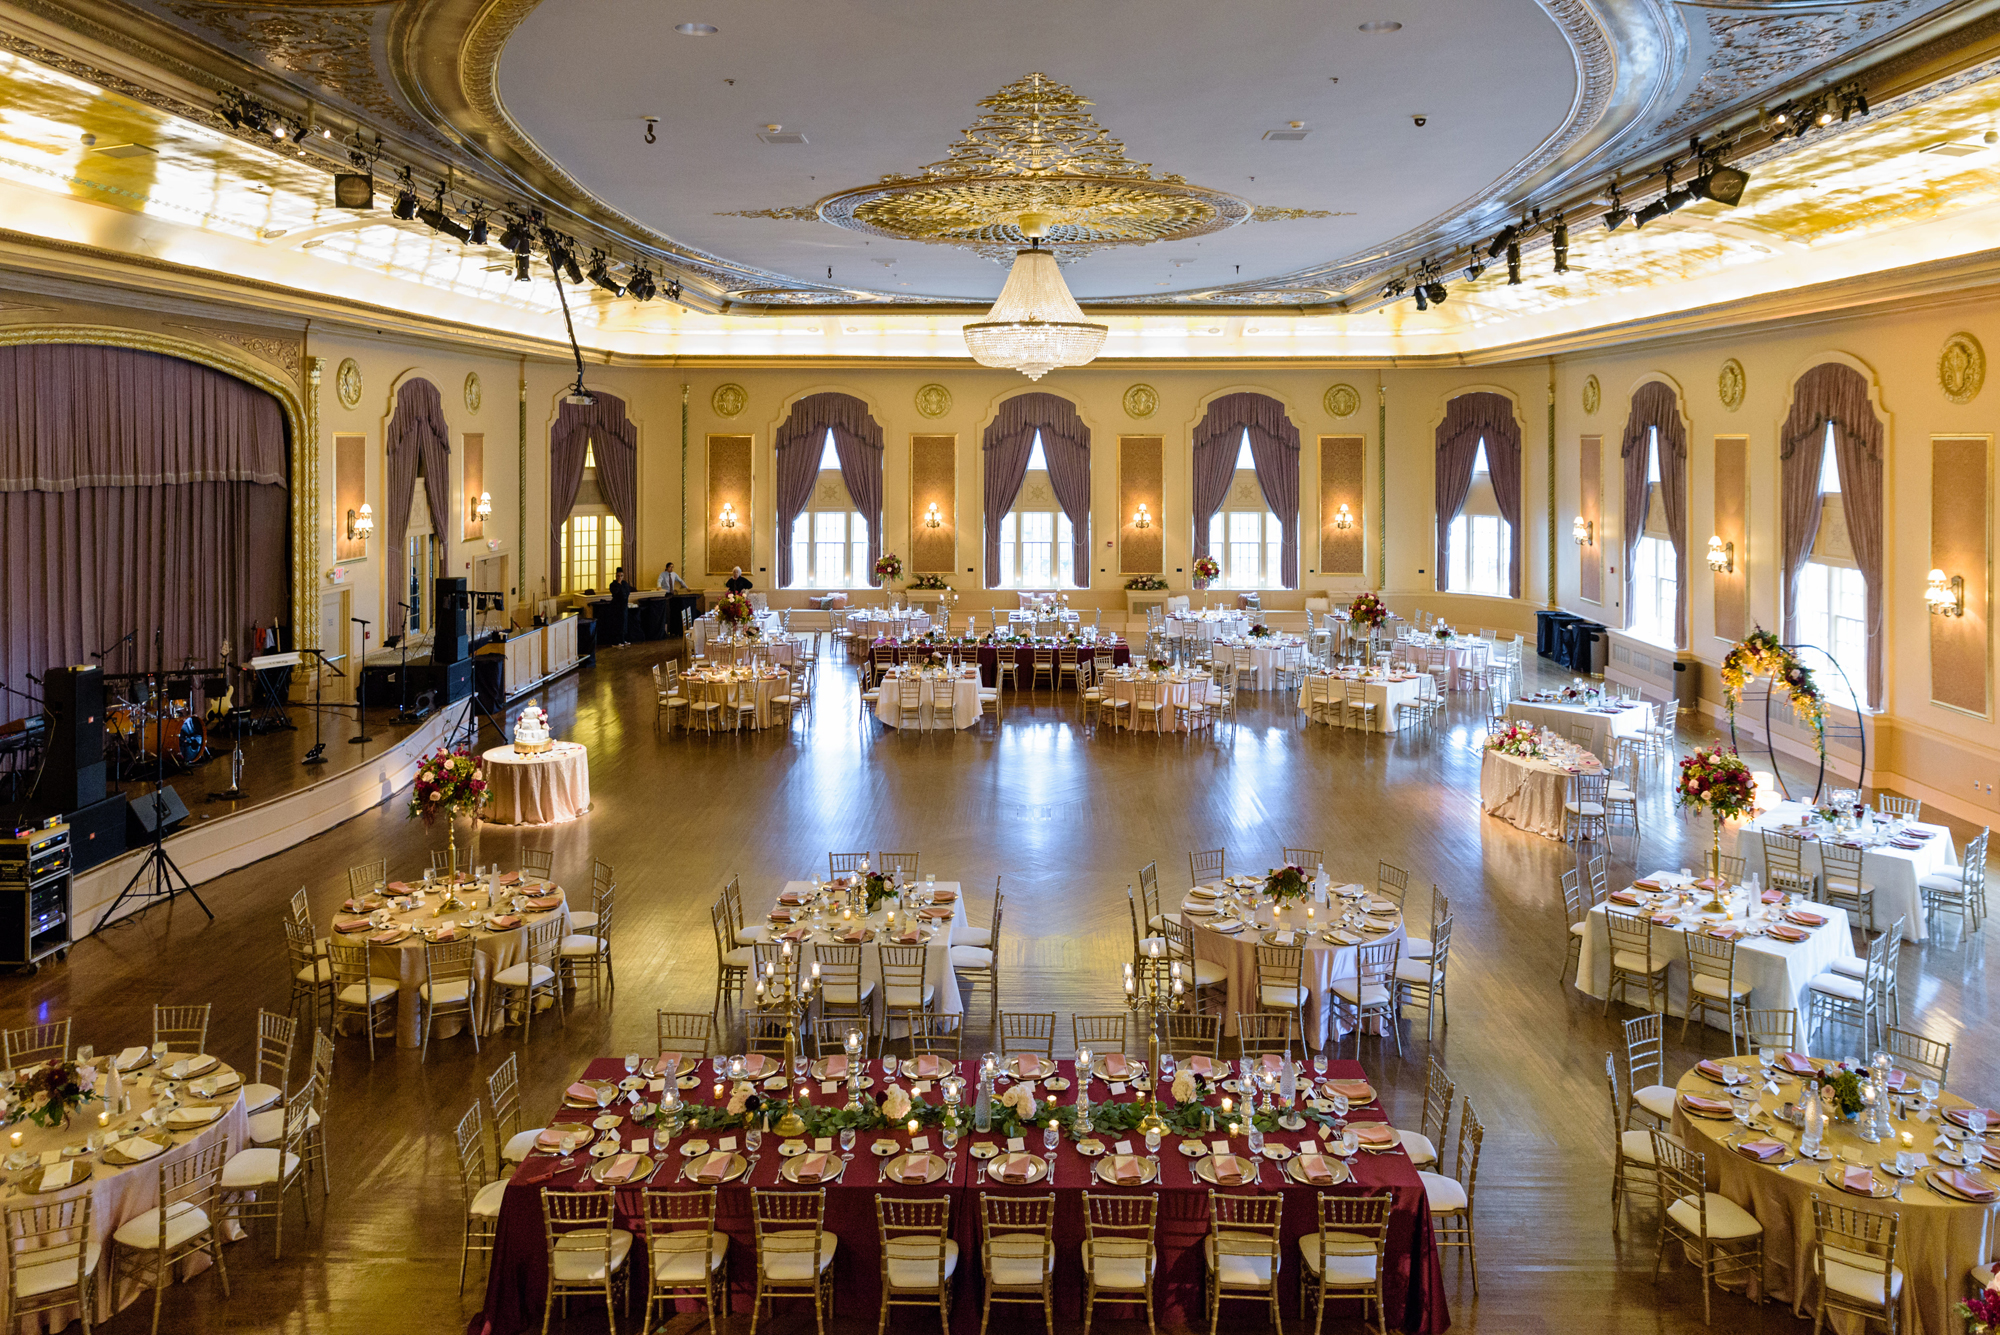 Wedding Reception details at the Palais Royale